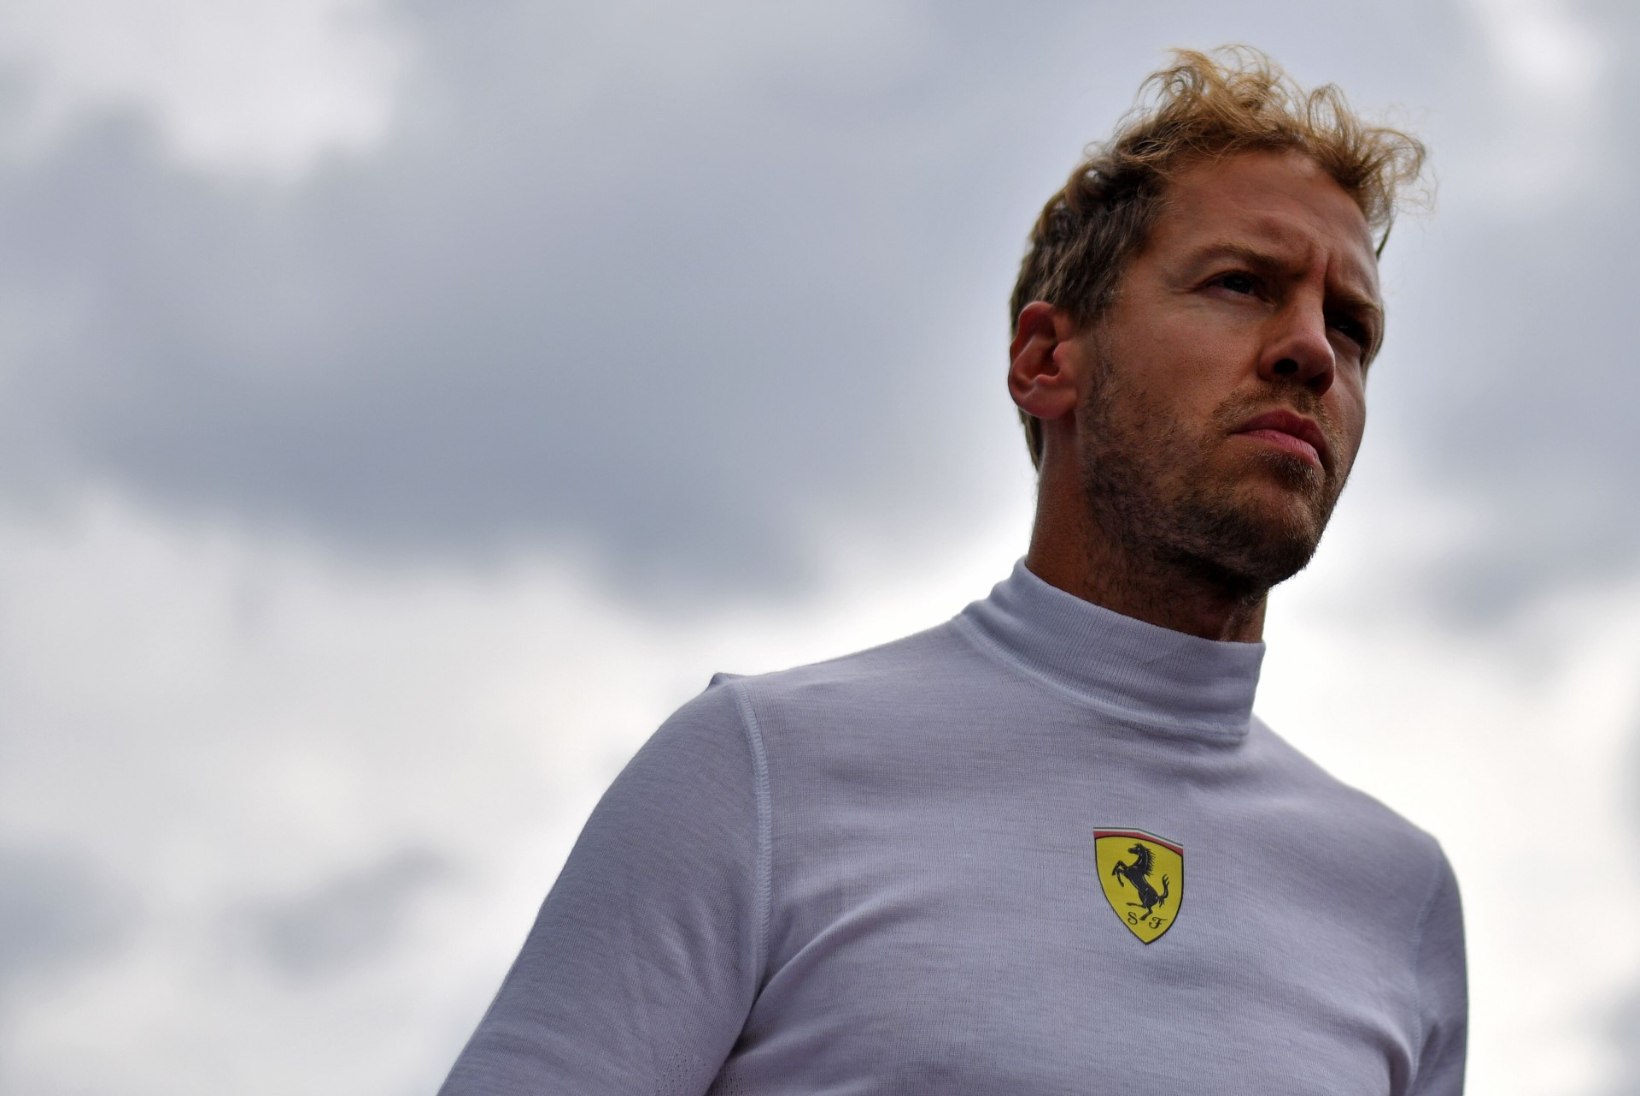 Sebastian Vettel: olen iseenda suurim vaenlane